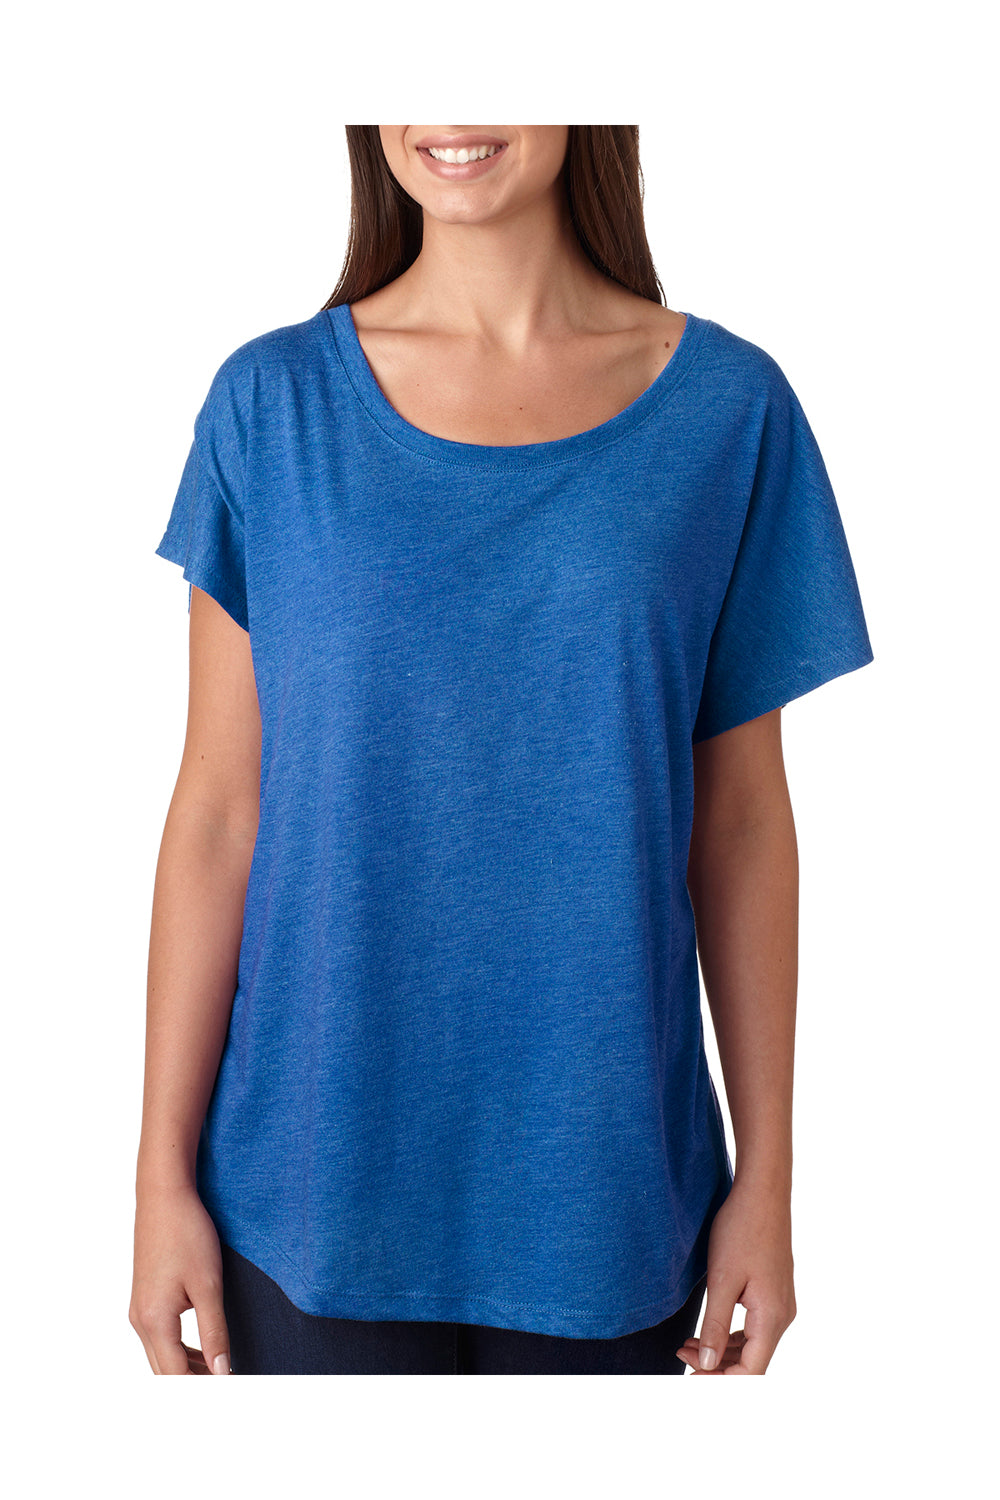 Next Level 6760 Womens Dolman Jersey Short Sleeve Scoop Neck T-Shirt Royal Blue Front